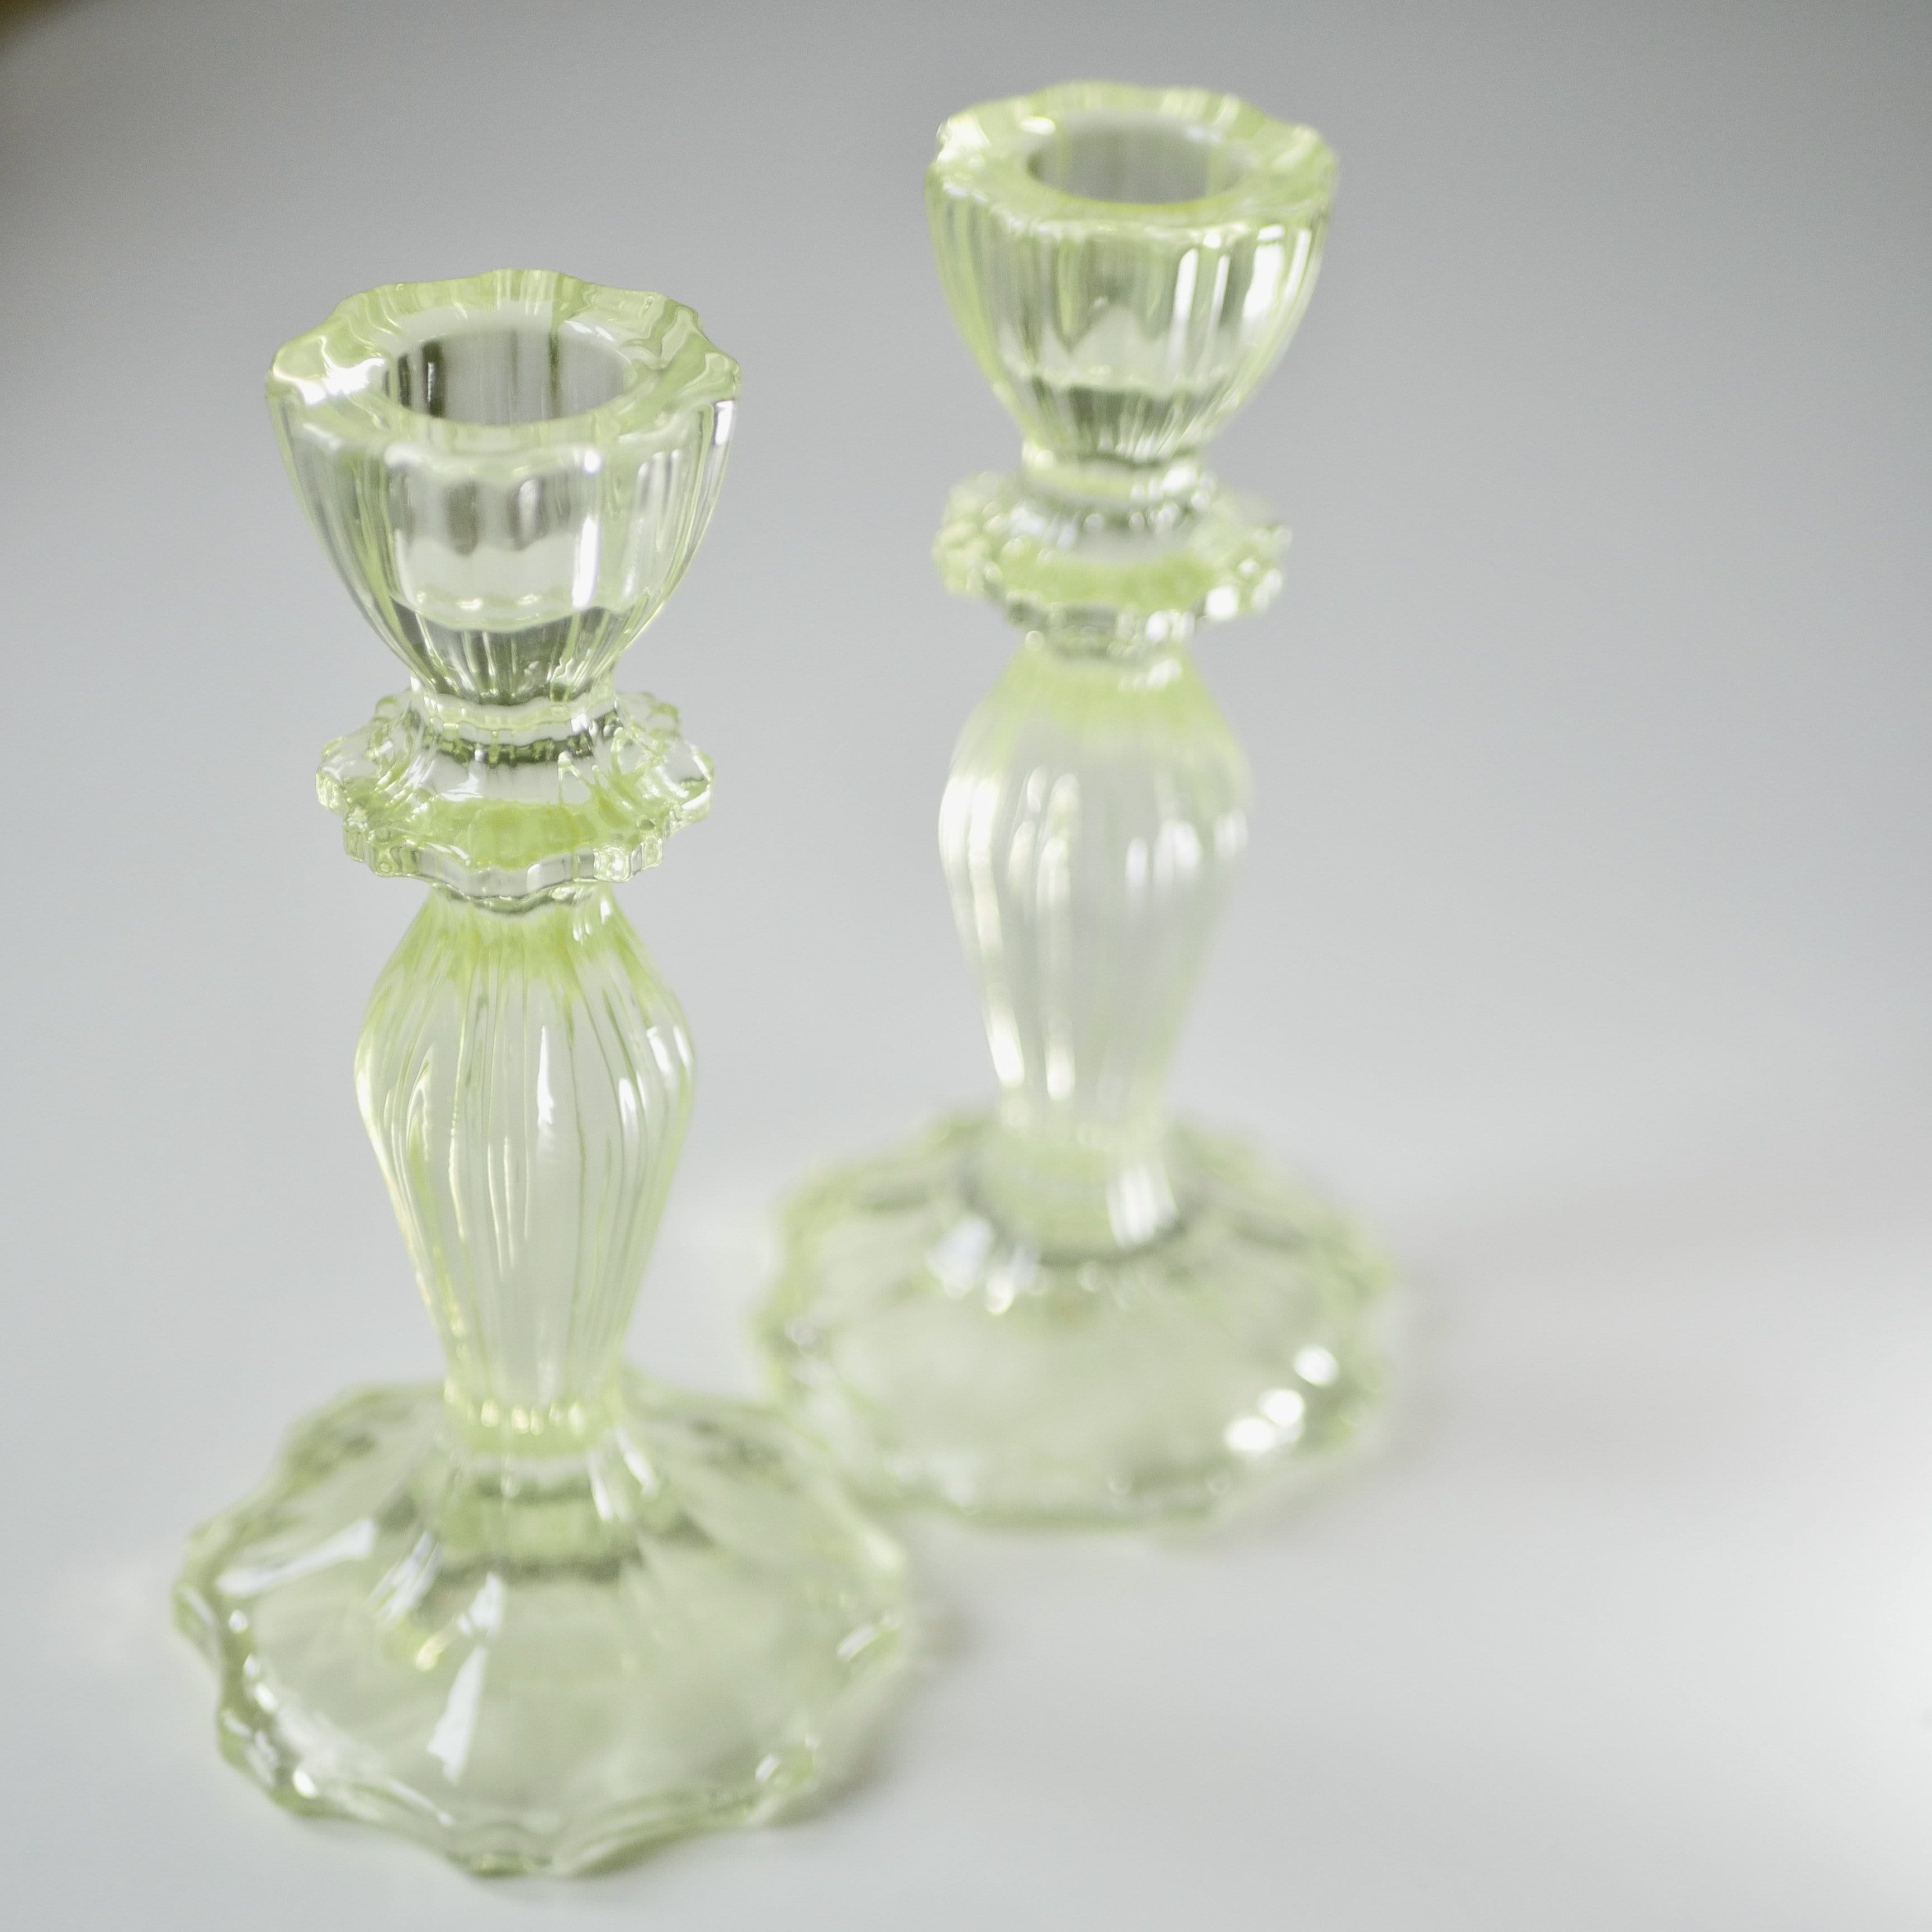 BOTANICAL GREEN GLASS LACE-EDGE CANDLESTICKS - Pair